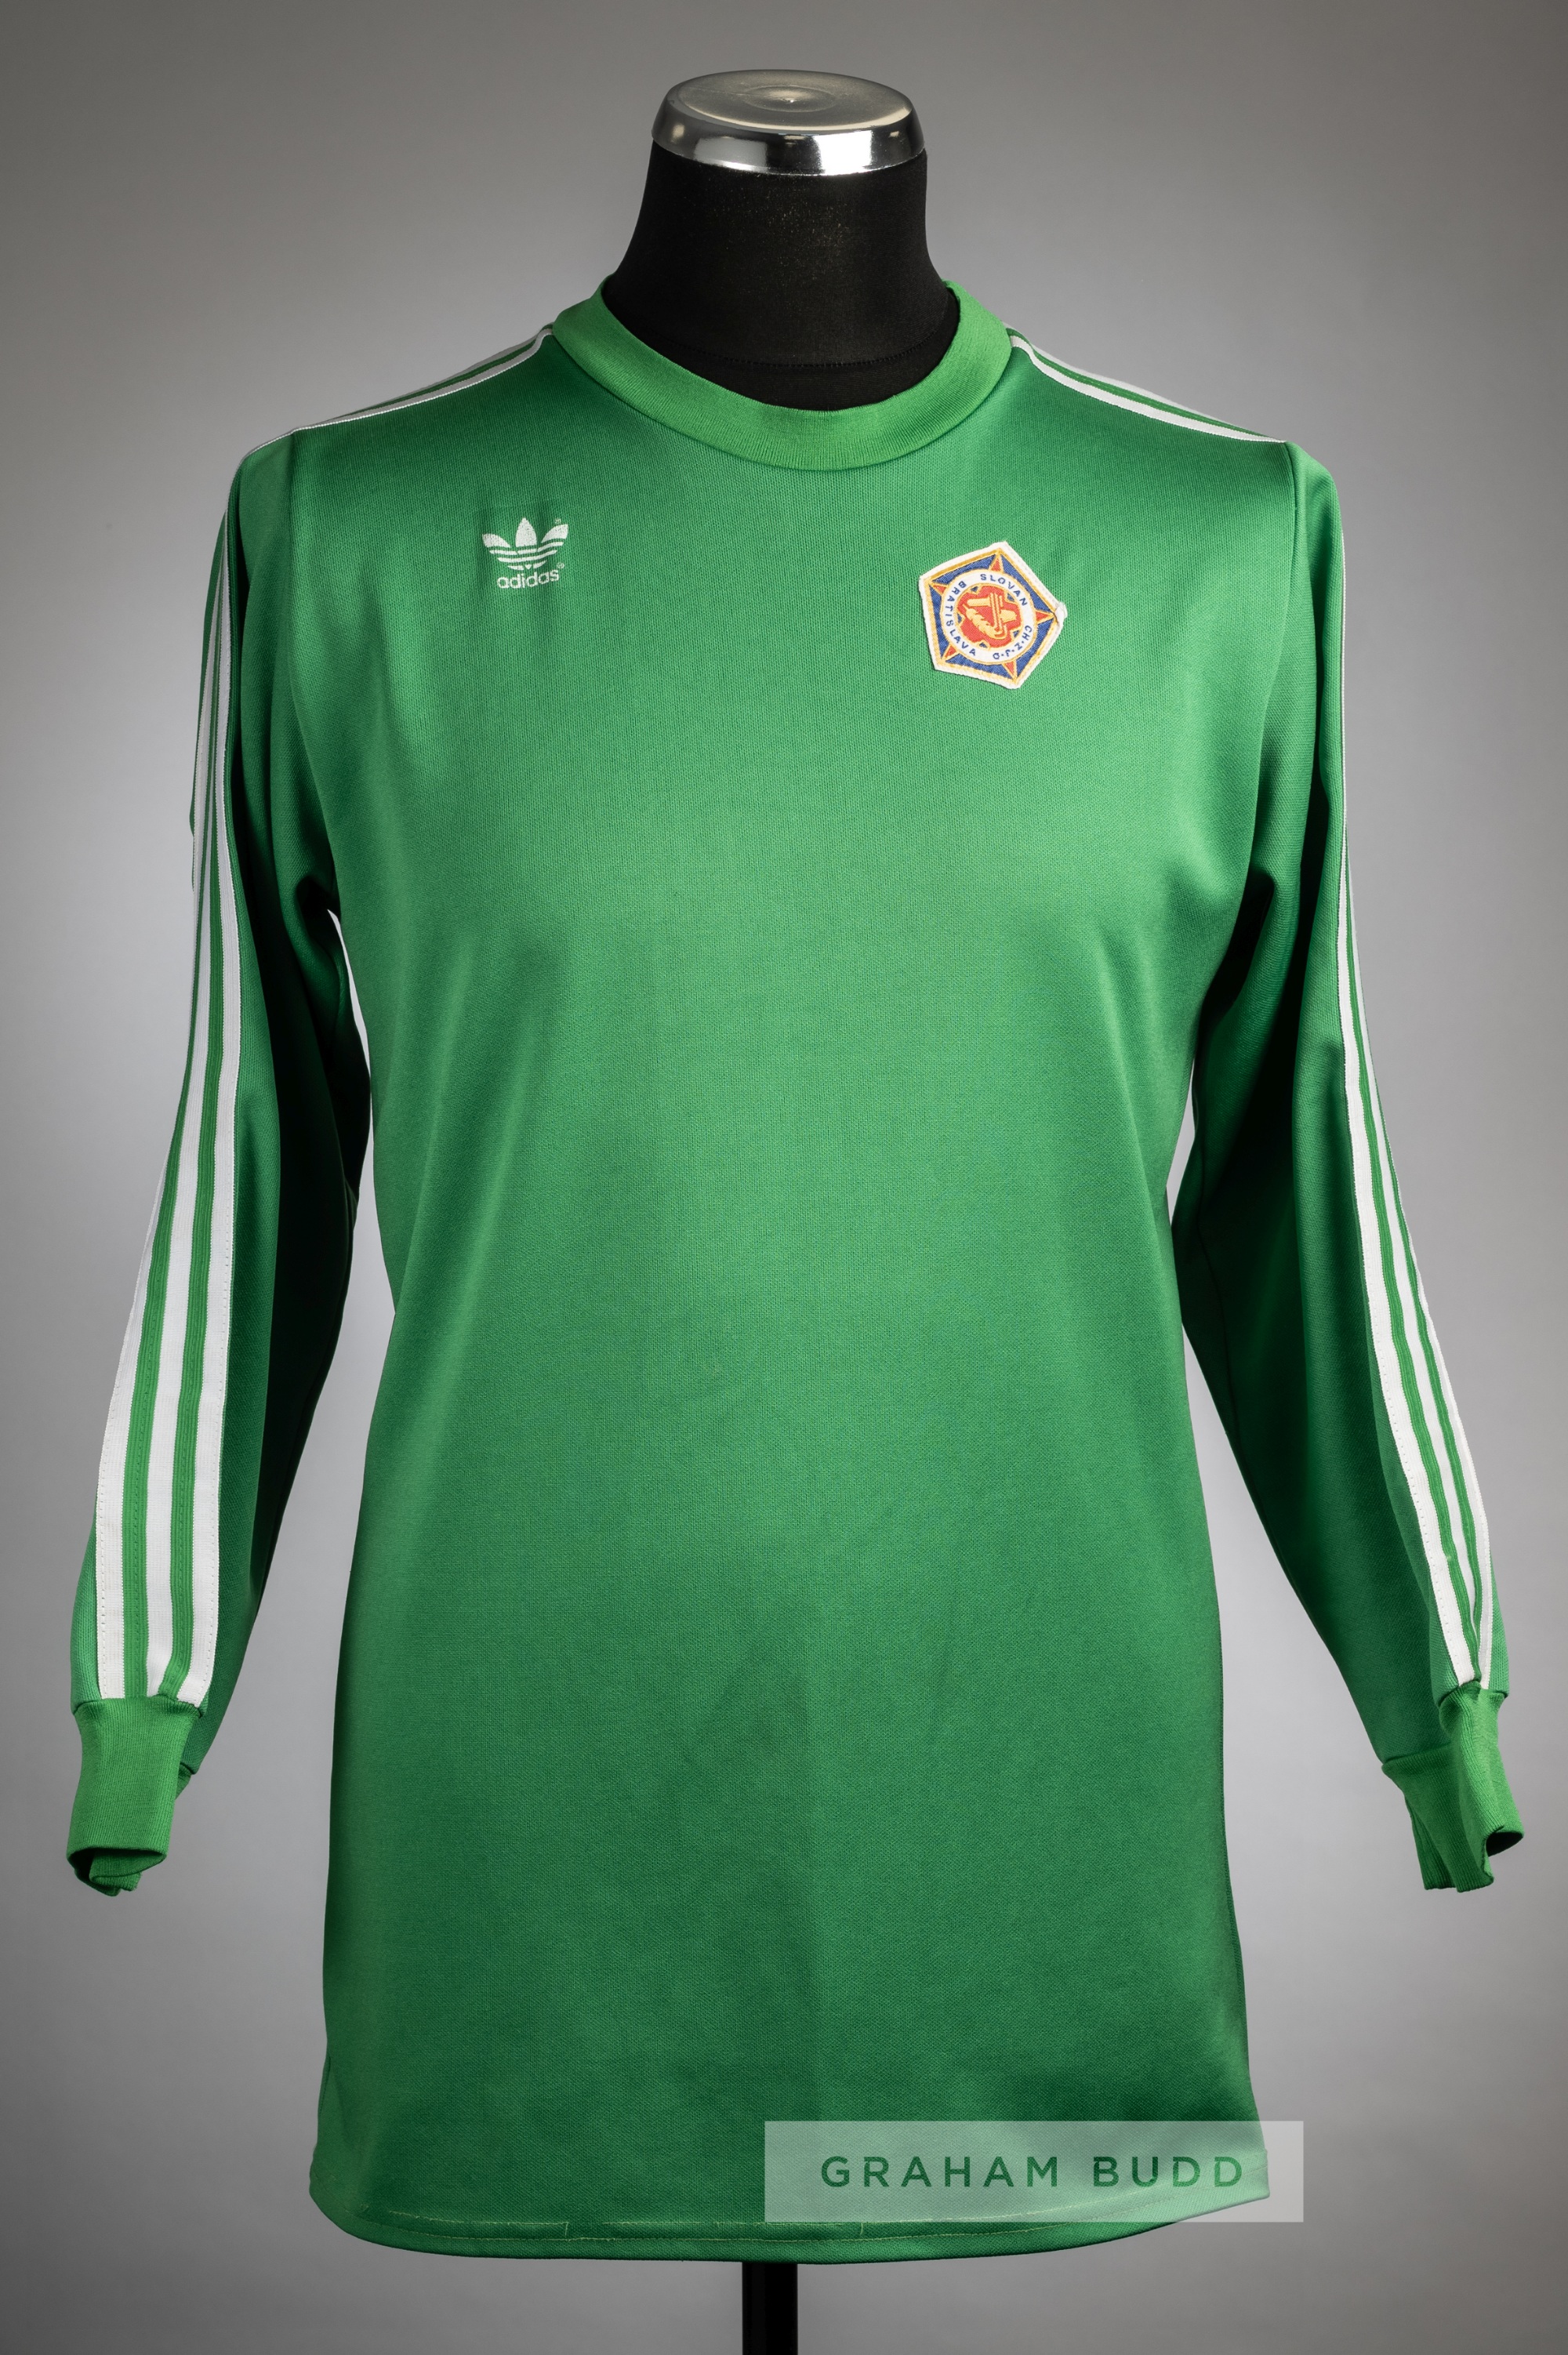 Green Slovan Bratislava No.1 goalkeeper's jersey, circa 1984, Adidas, long-sleeved with club crest